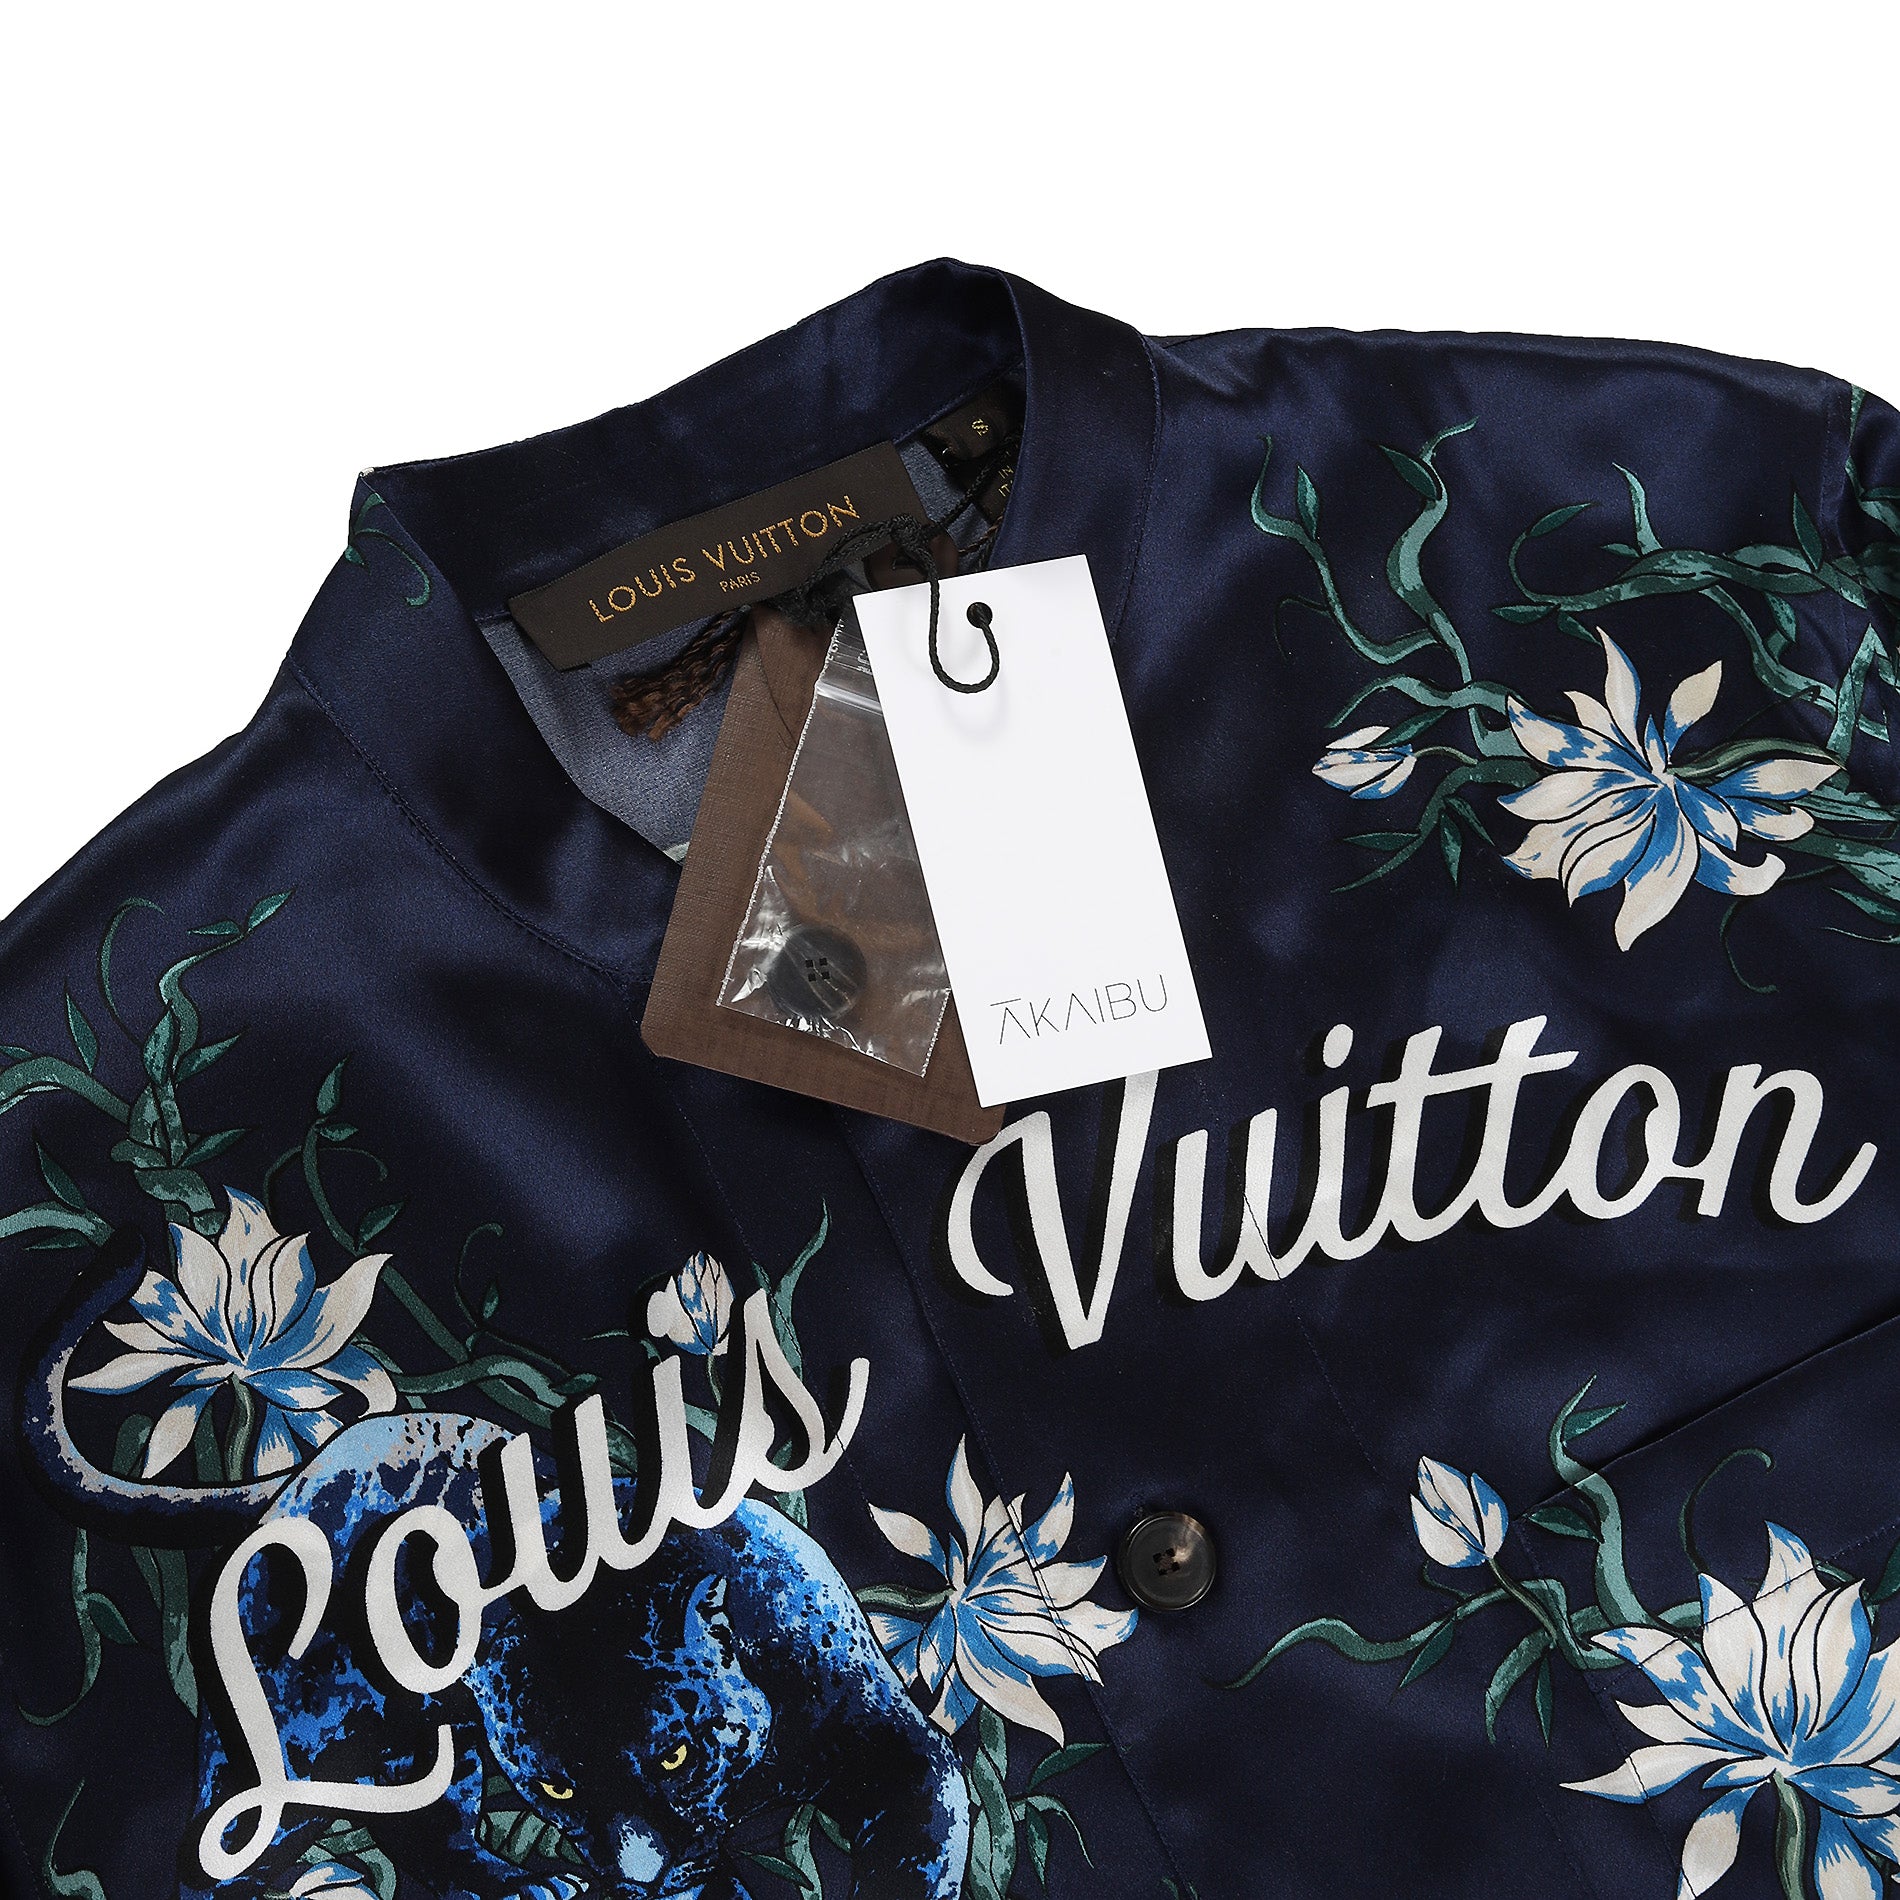 Louis Vuitton SS16 Black Panther Silk Shirt